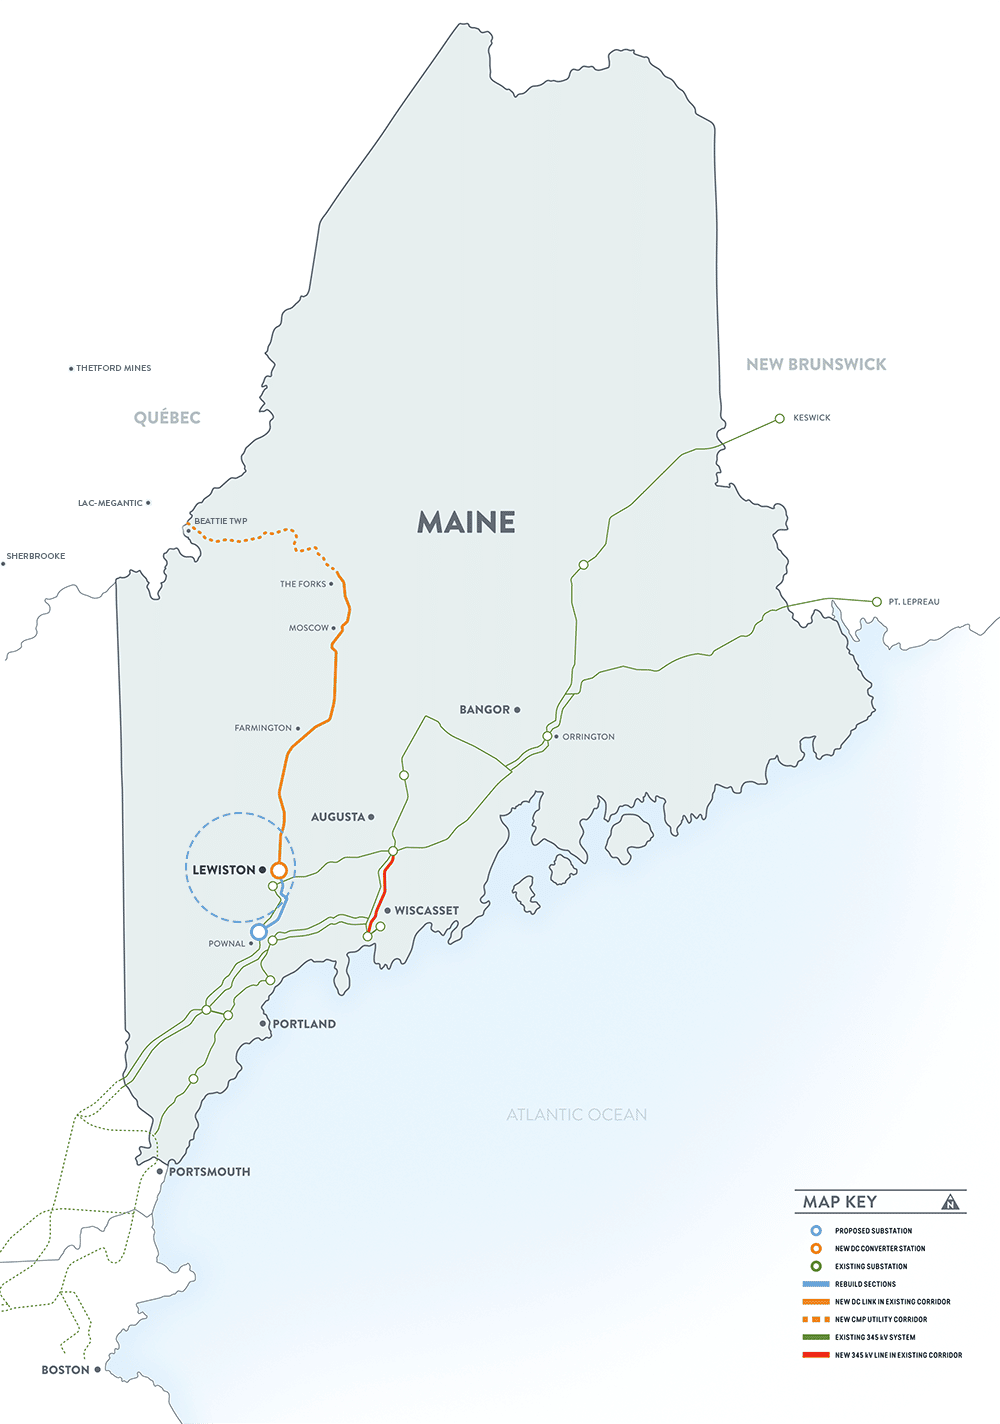 Maine Regulator Clears Avangrid’s $1 Billion Hydropower Transmission Line